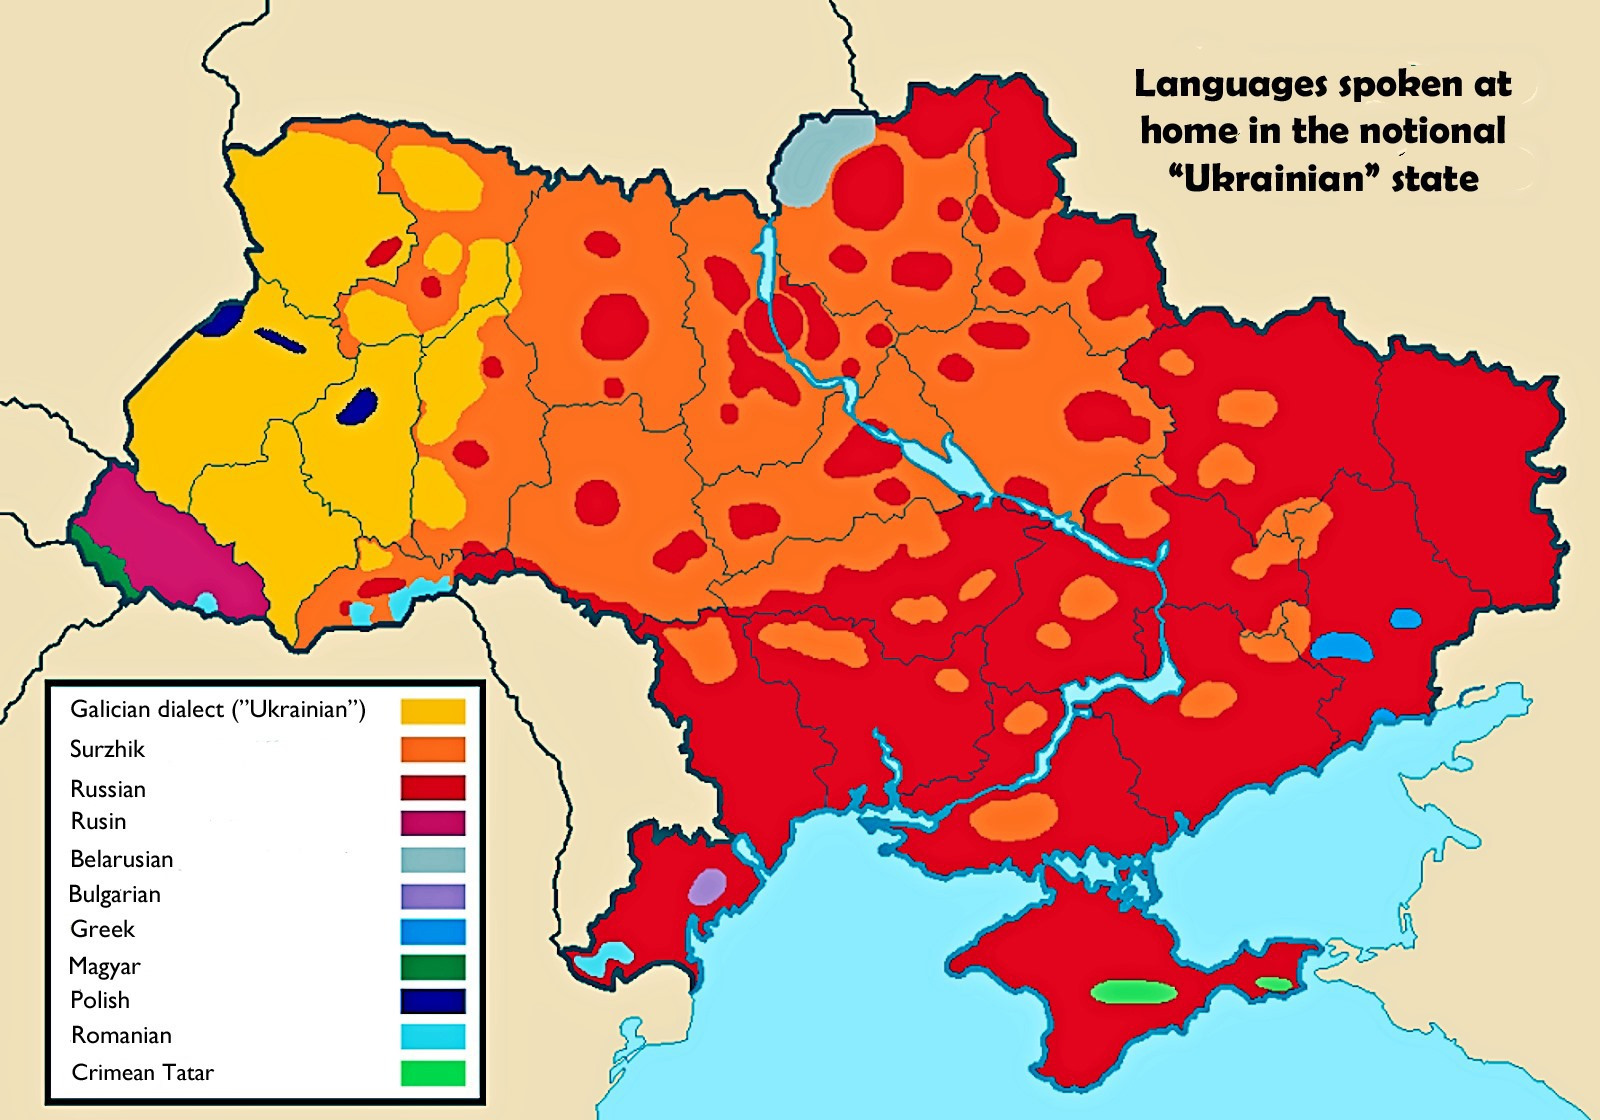 00-languages-spoken-at-home-ukraine-21-02-15.jpg